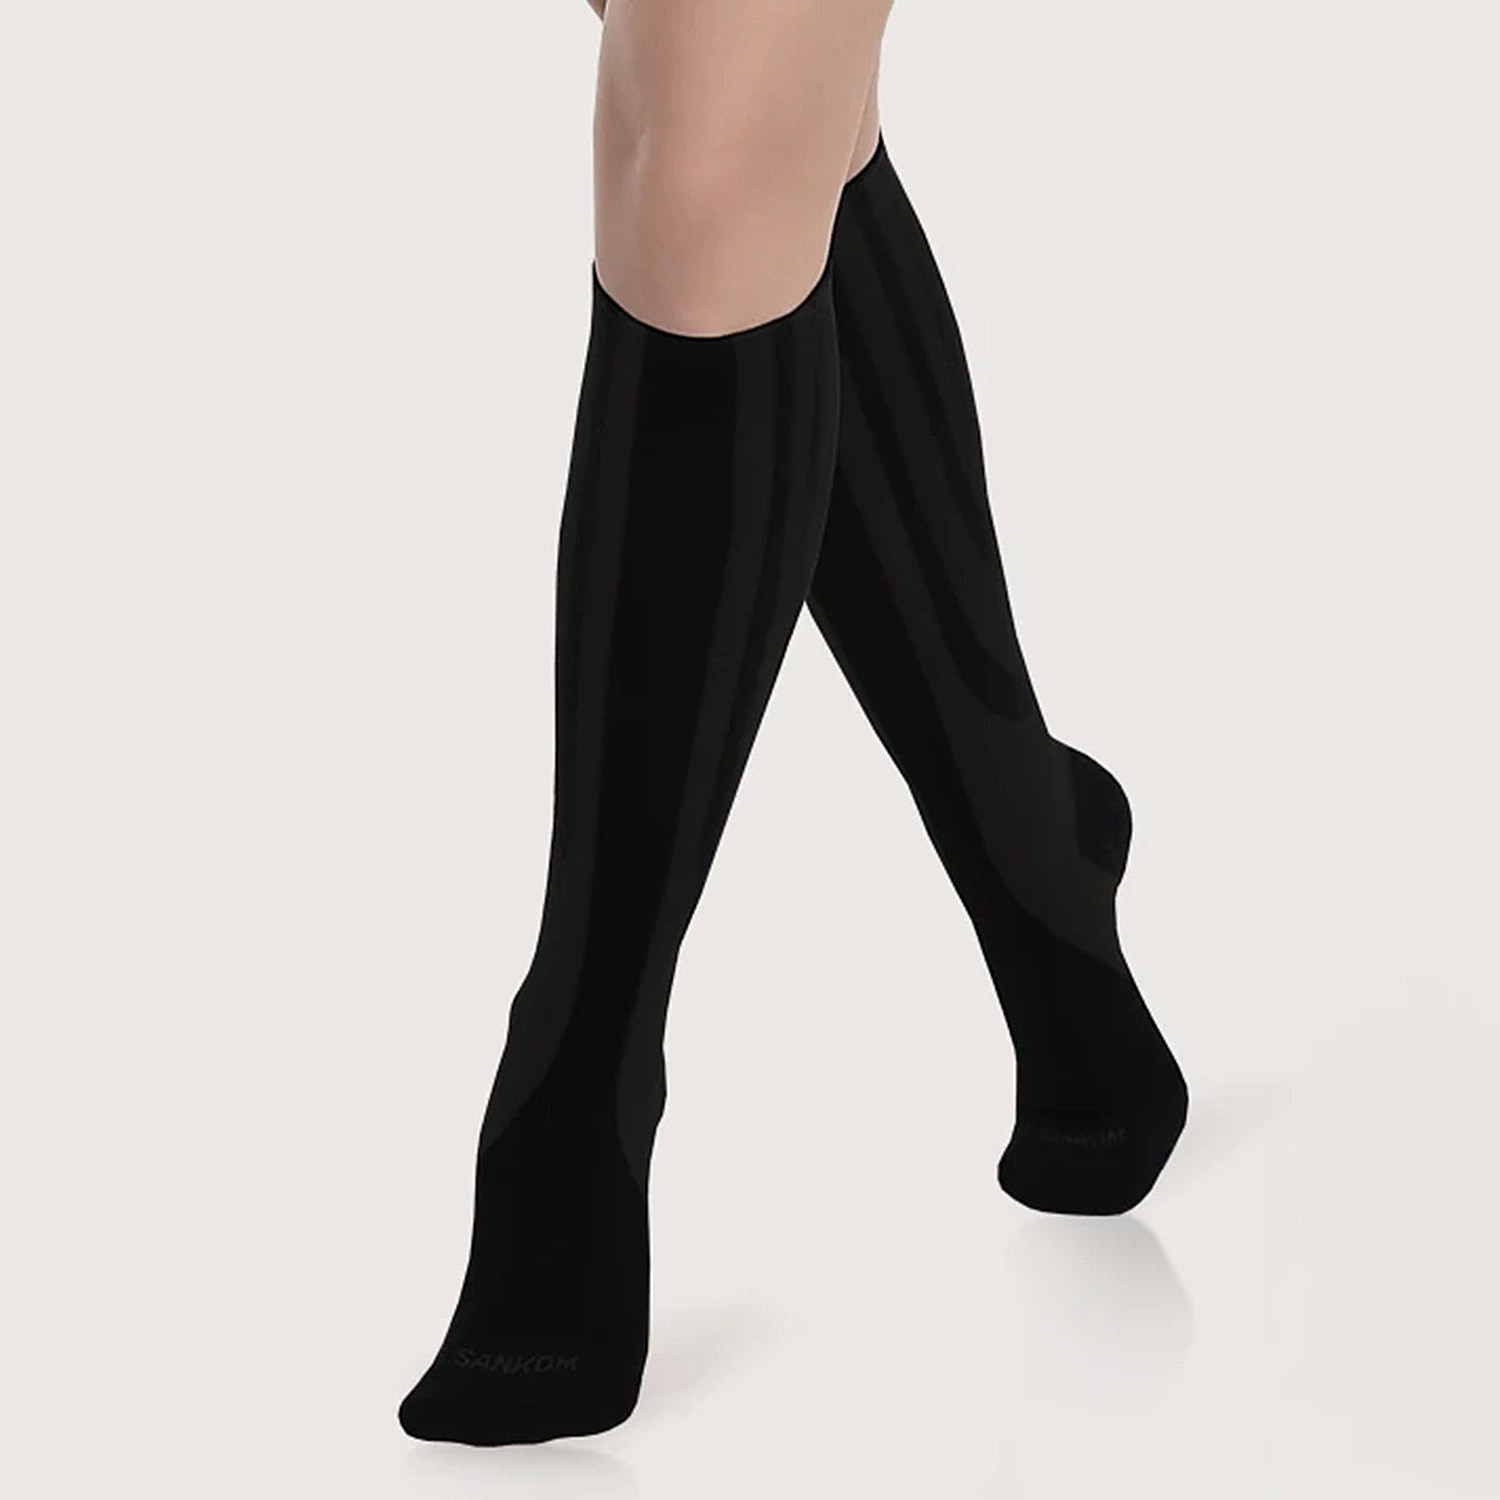 SANKOM Patent New Light Socks (Size S- UK 3 to 7.5) - Black